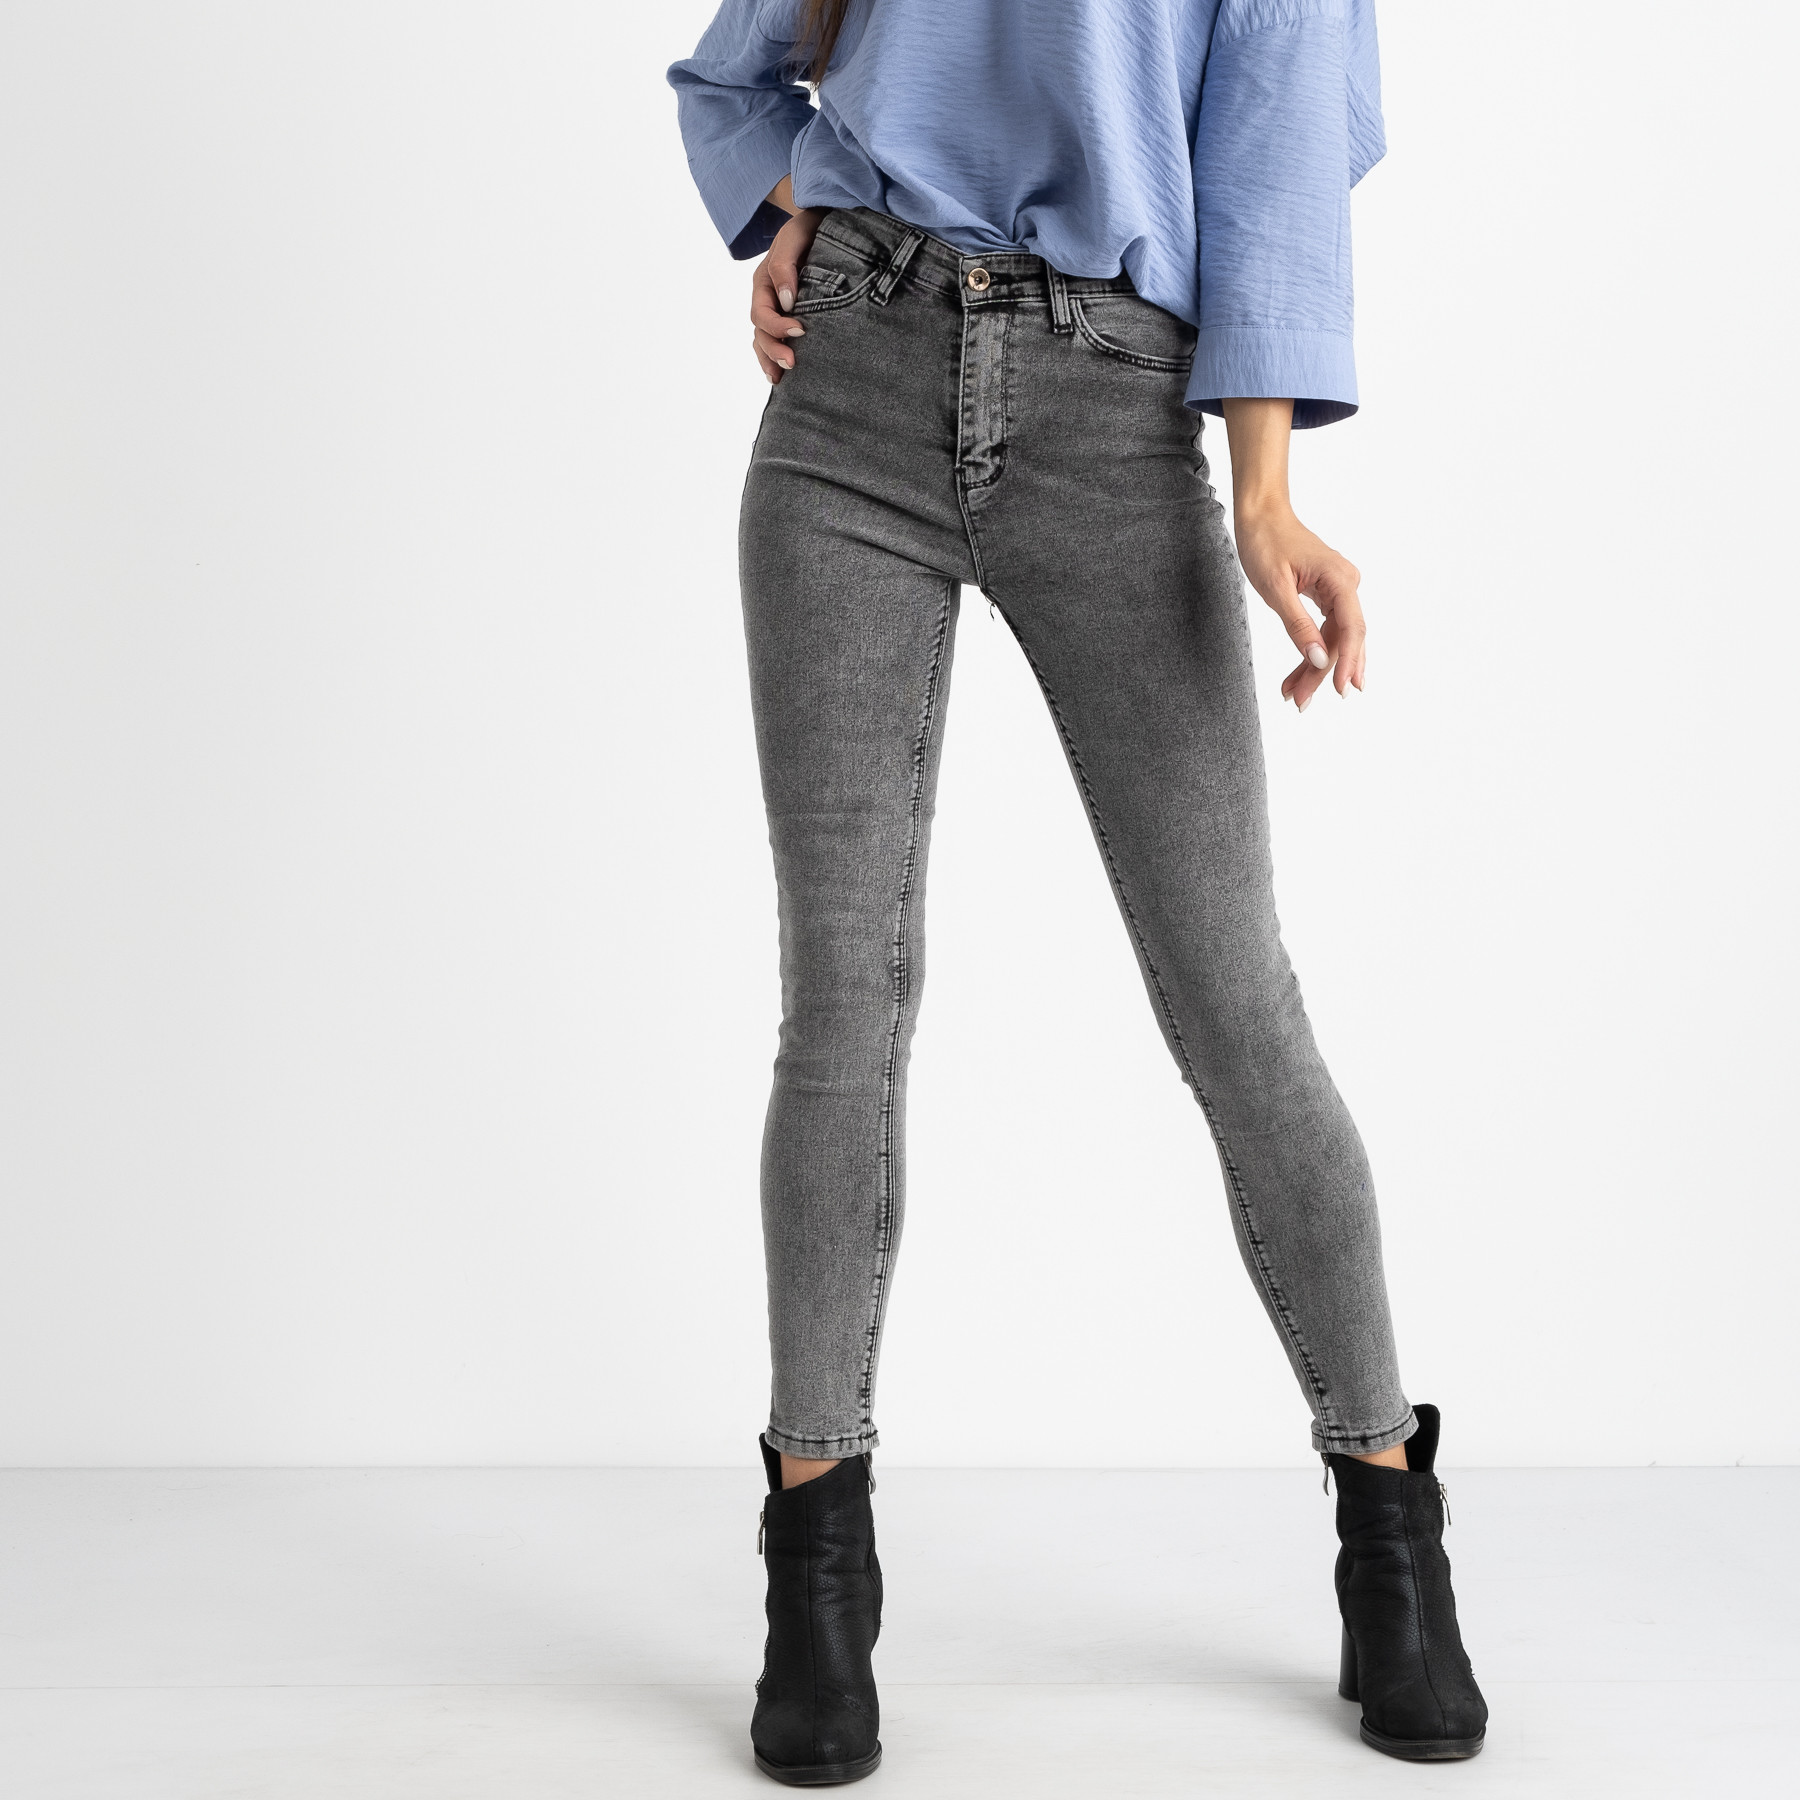 0004-10 Well see джинсы женские серые полубатальные стрейчевые (8 ед. размеры на бирке: 28.29/2.30.31.32.33.34)